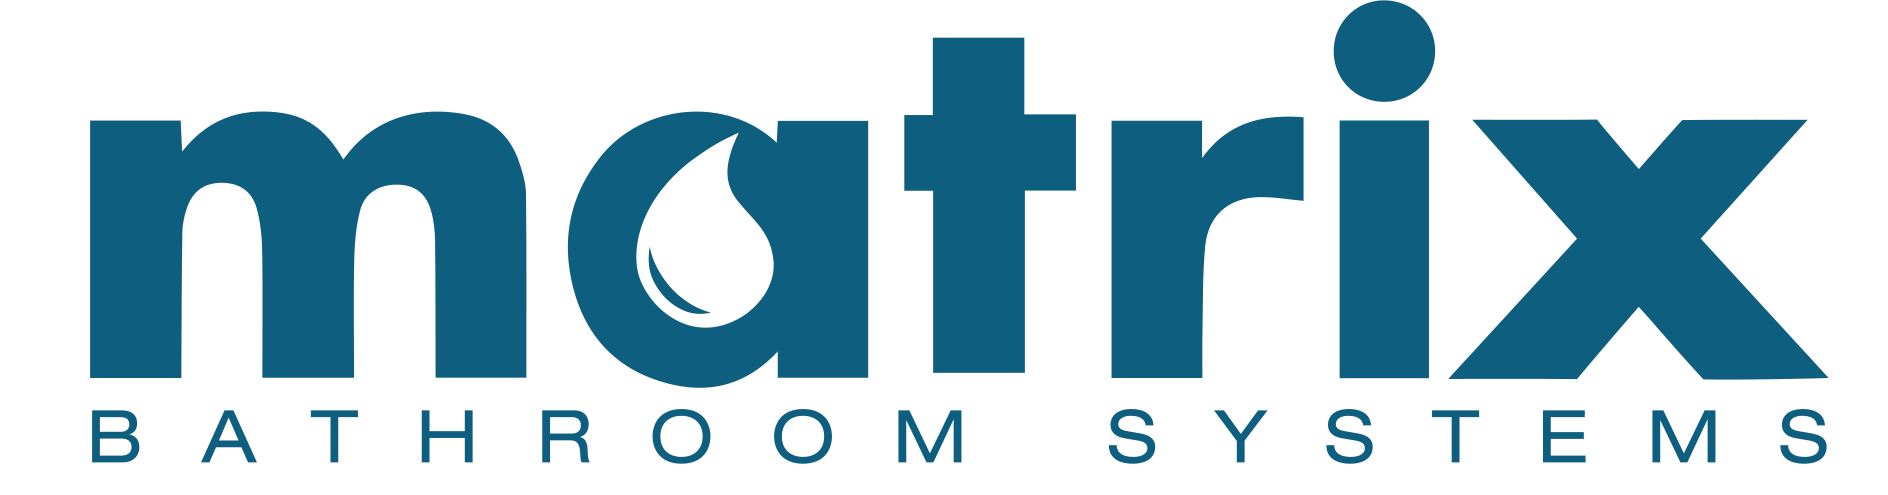 Bathroom Logo - Matrix Bathroom Systems. Better Business Bureau® Profile